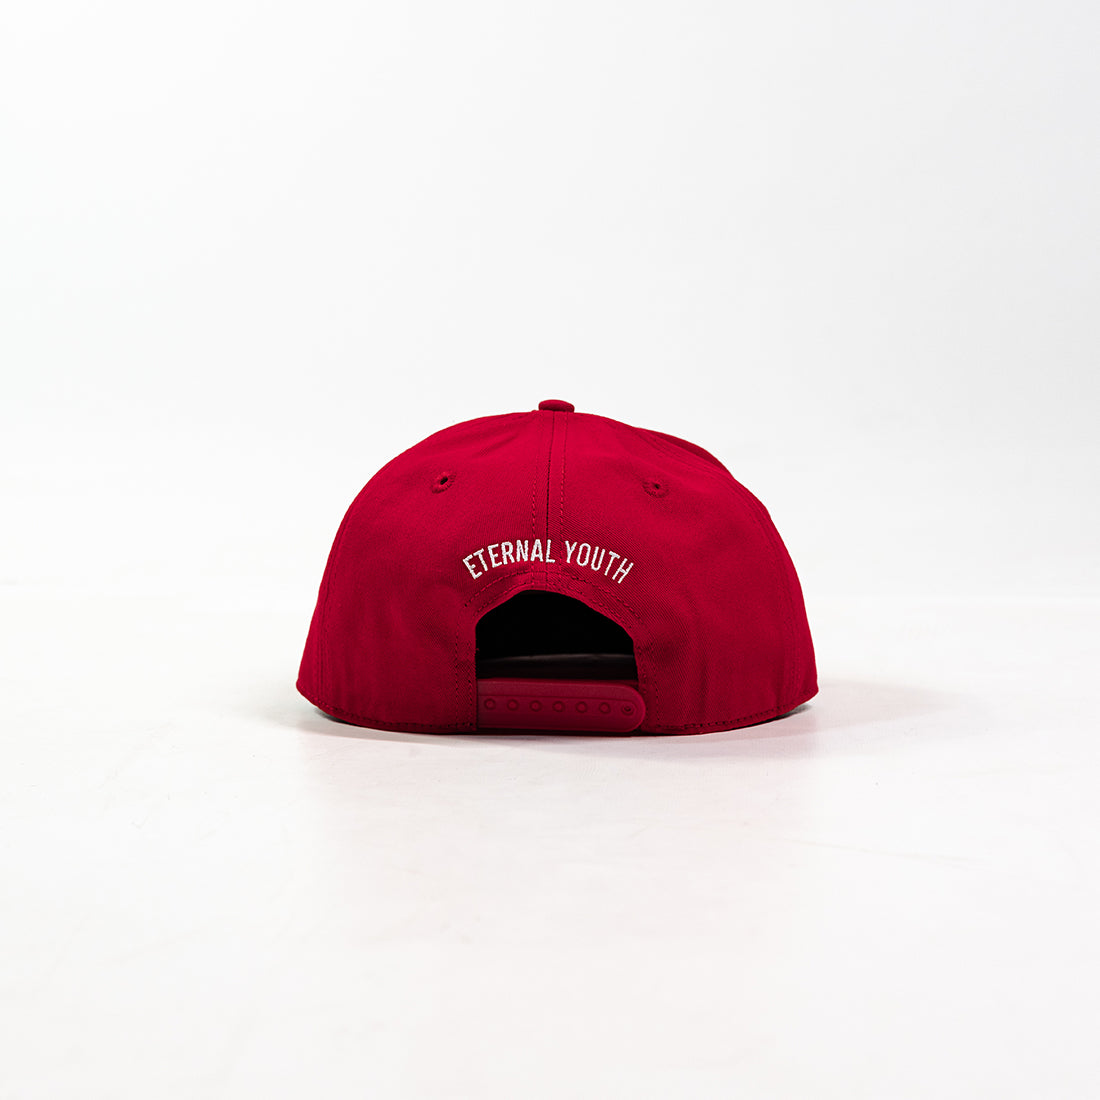 Cappellino logo ricamato 0275 - Snapback-Rosso